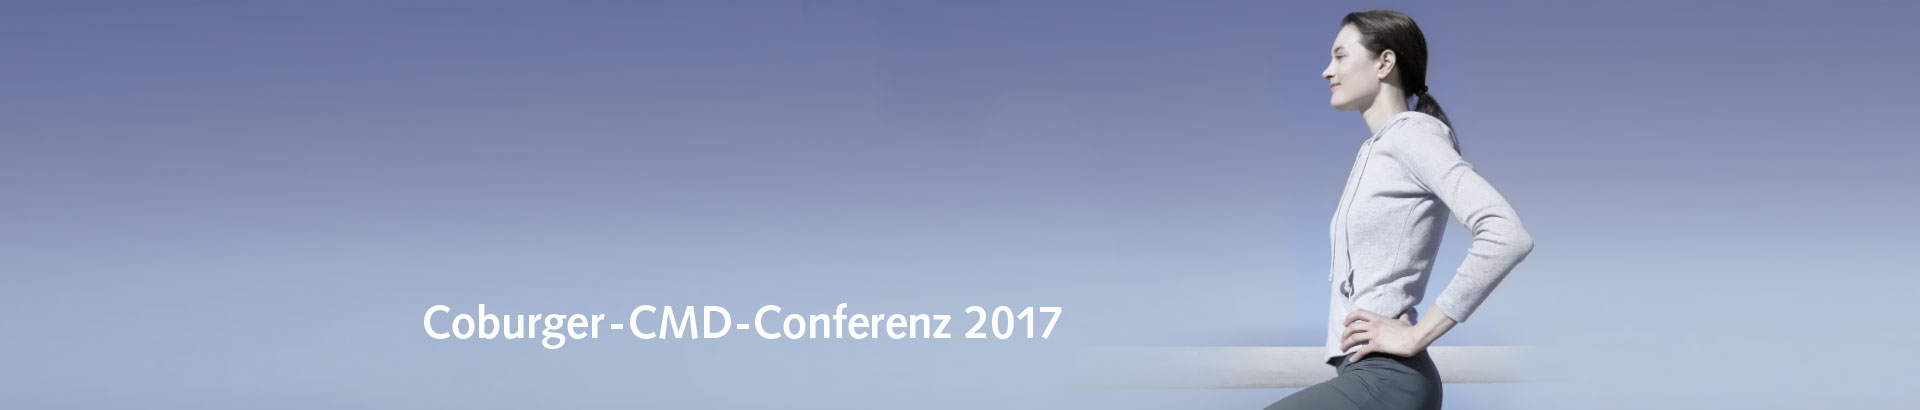 Coburger-CMD-Conferenz 2017